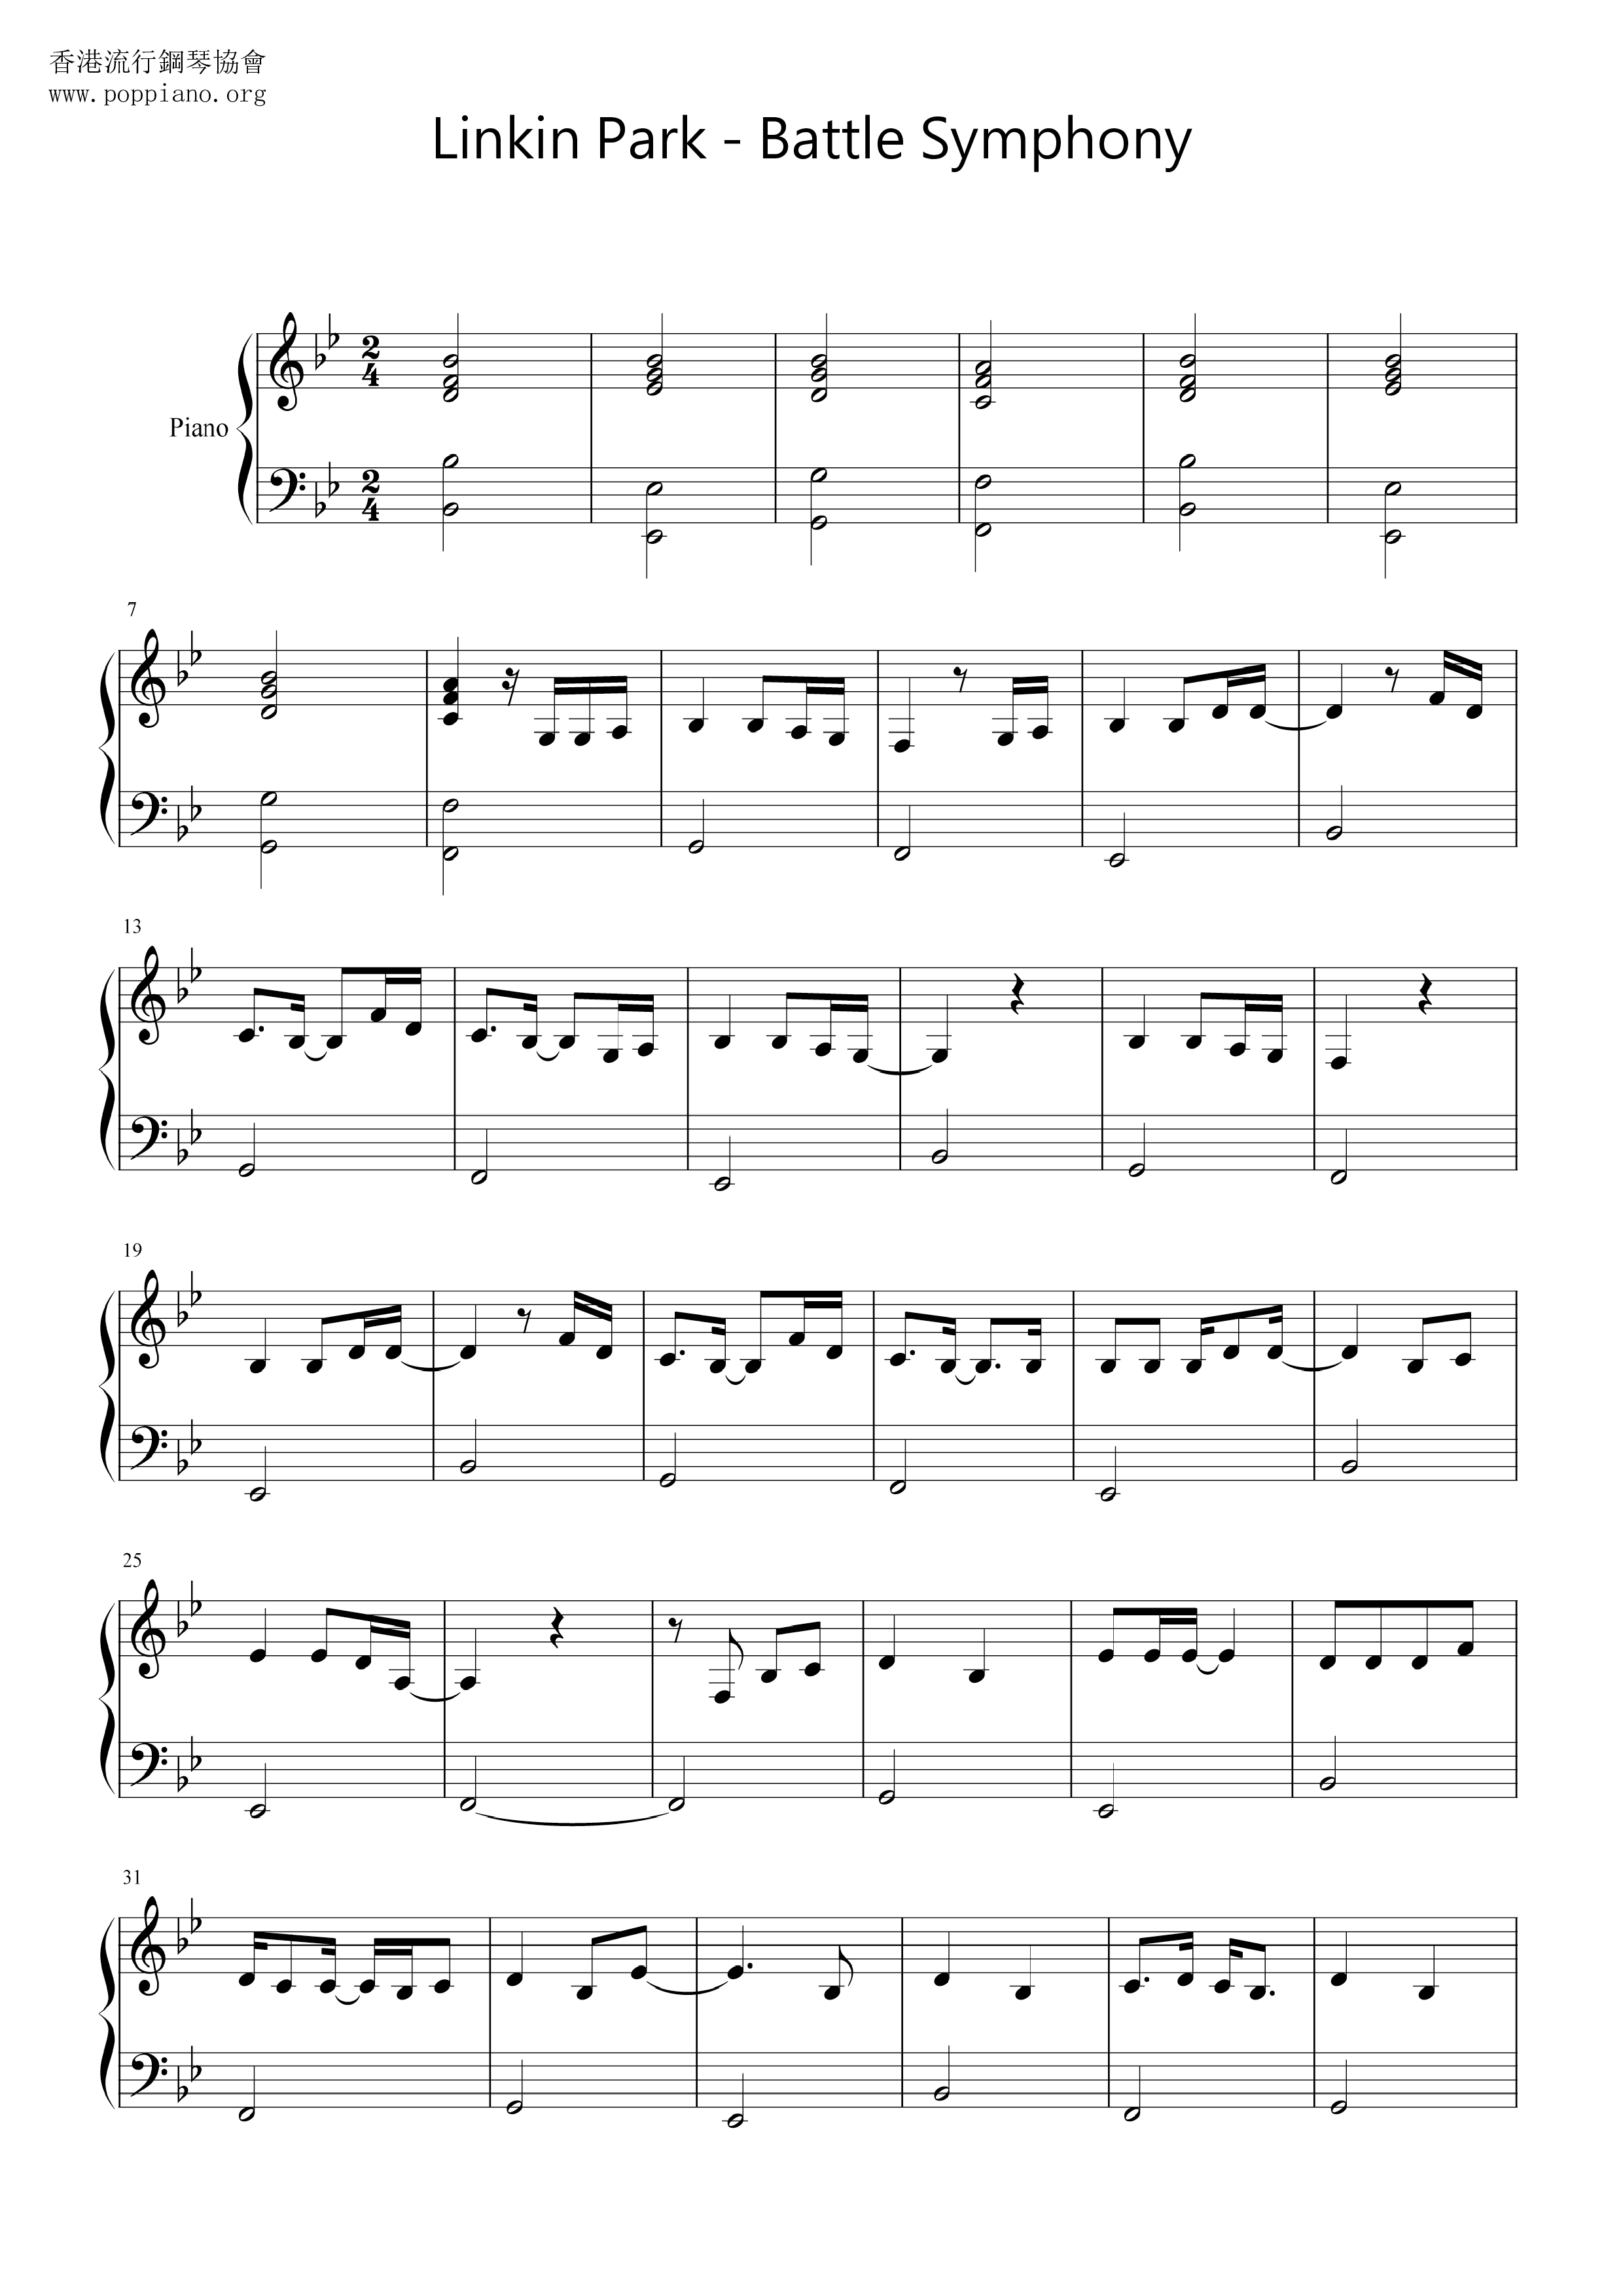 Battle Symphony Score